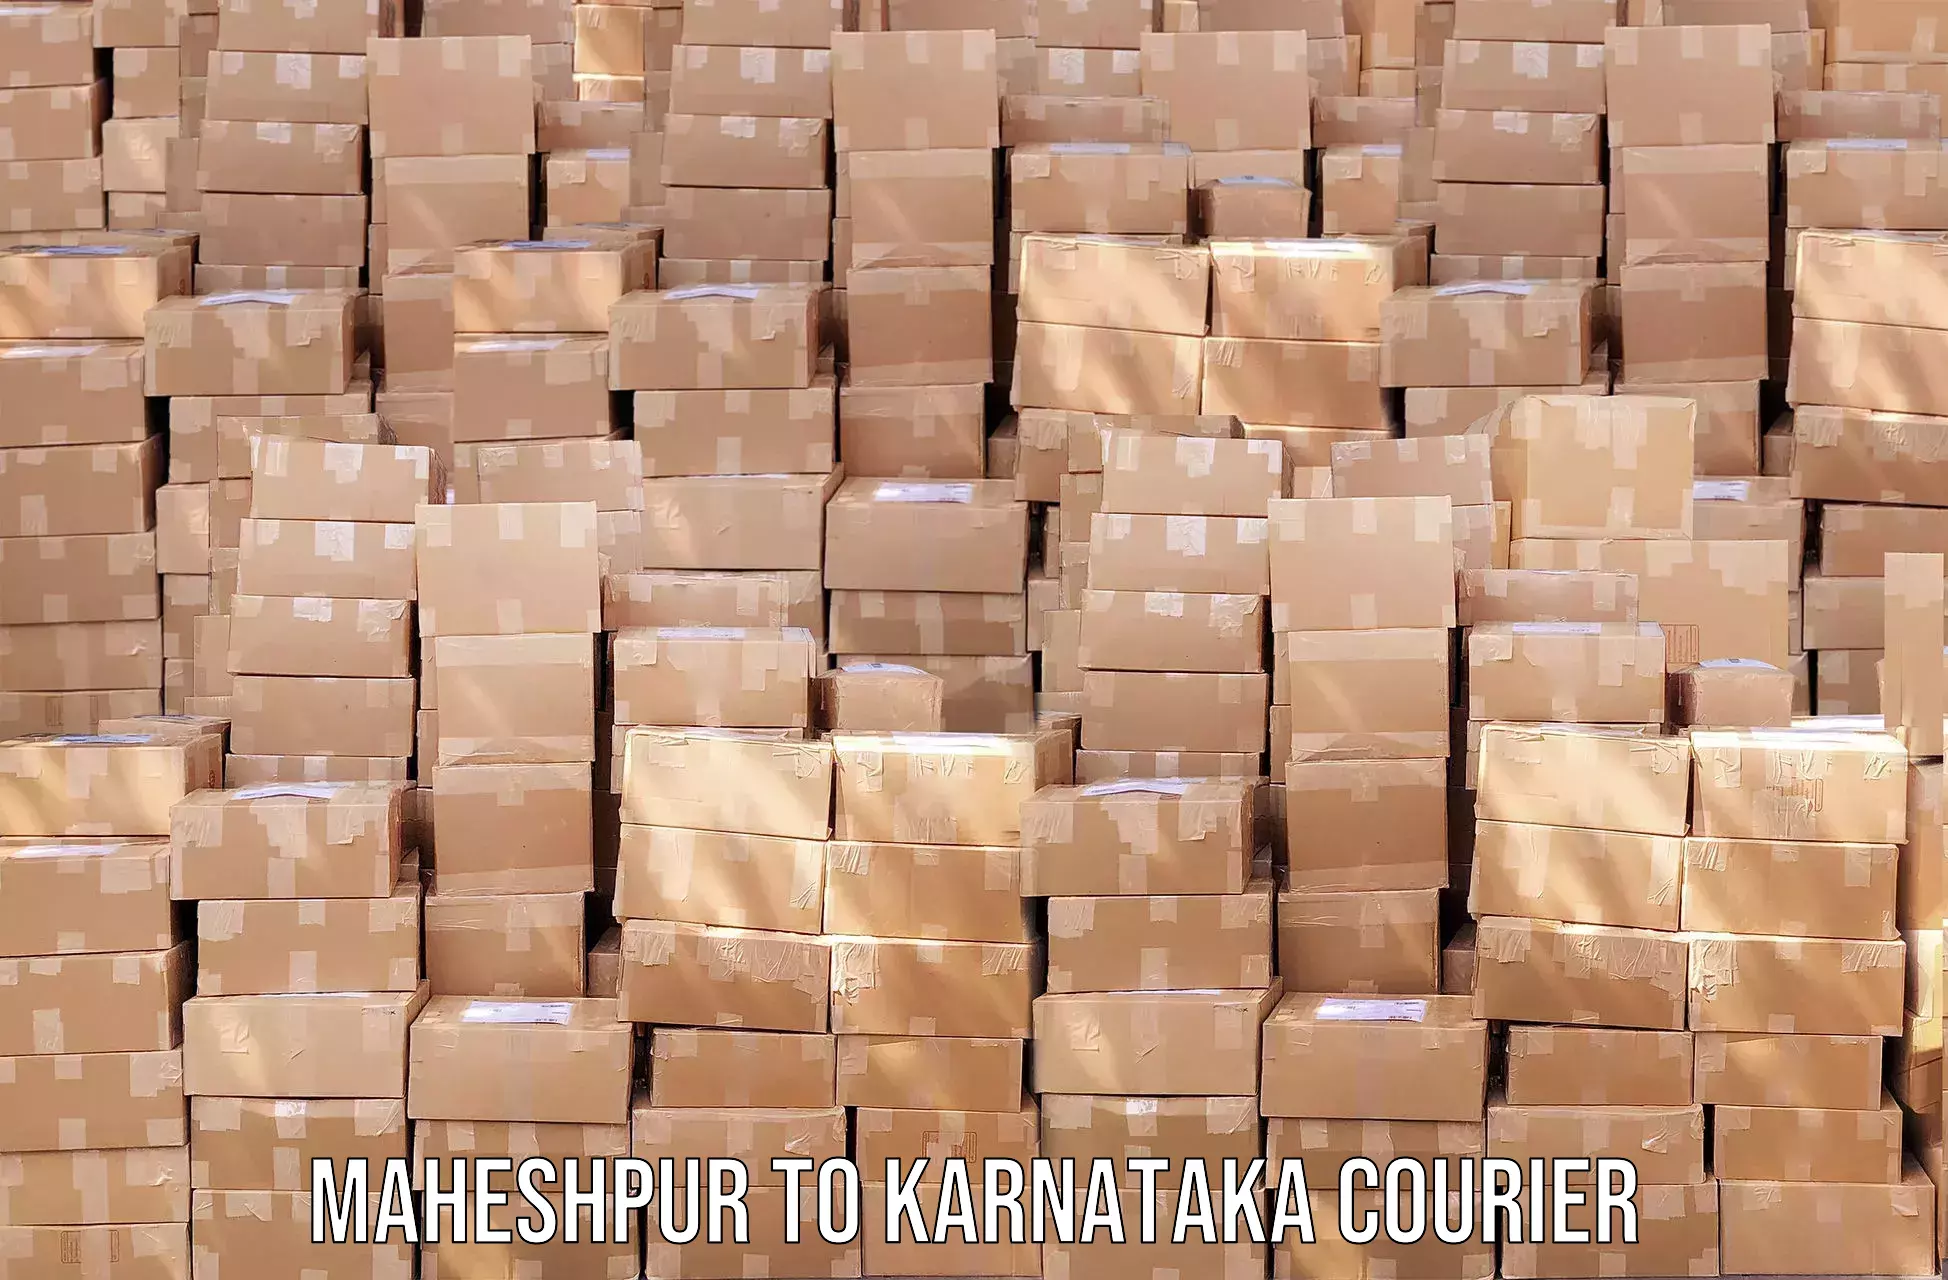 Digital courier platforms Maheshpur to Udupi